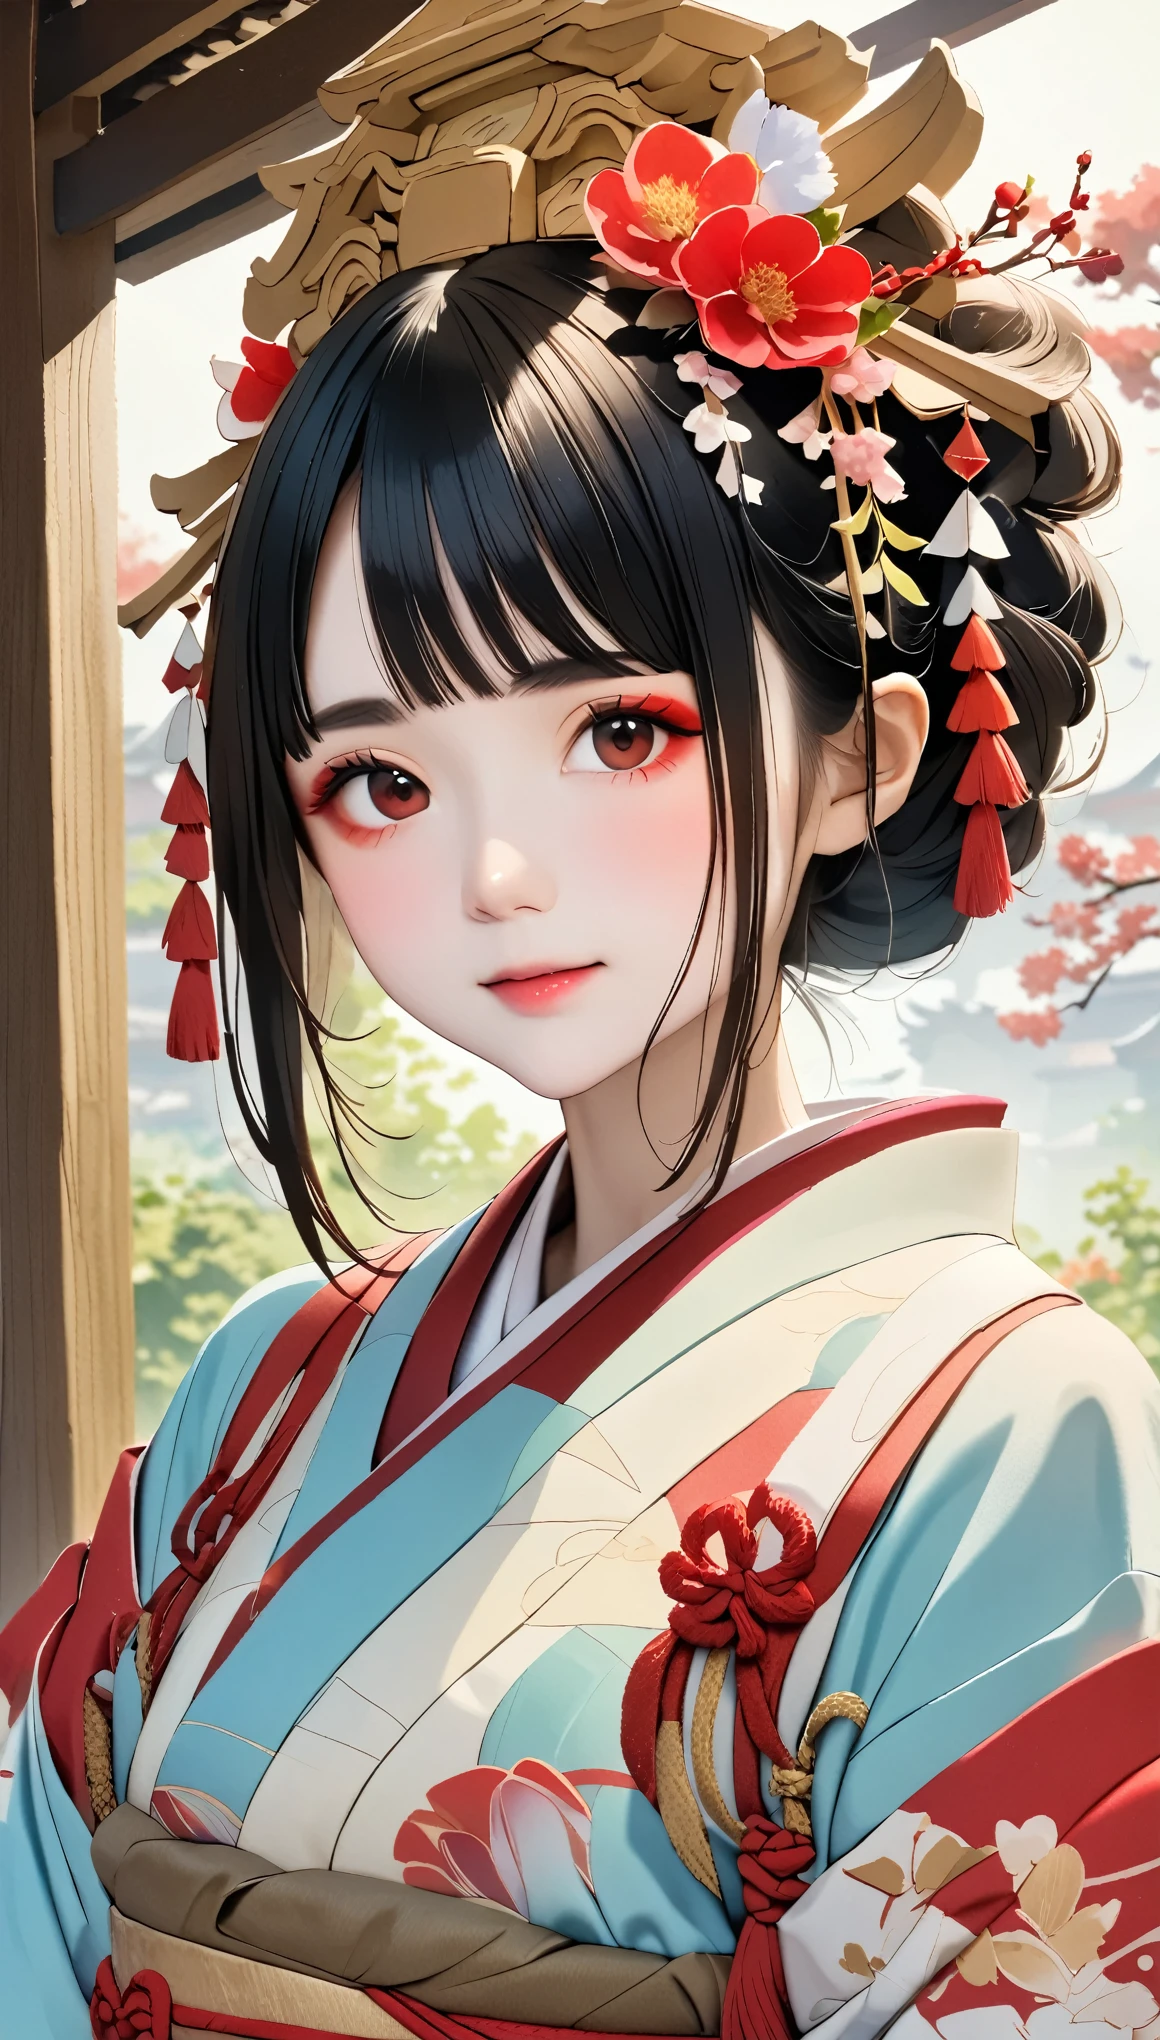 (((Full Body Angle:1.3、Random pose、Wabi-sabi、Japan human heart)))、Pale colors、Watercolor、Alafi wearing a kimono with a red flower headpiece, Geisha Makeup, Full body angle、Portrait of a Geisha画, Geisha Makeup, Cute Face、Thin eyebrows、Portrait of a Geisha, Beautiful Geisha, Japanese Geisha, Glamorous and sexy geisha, 美しいPortrait of a Geisha画, Portrait of a Geisha,Full body angle、 Geisha hairstyle, remarkable Geisha Makeup、The background is Horyuji Temple、Old temple in Japan、